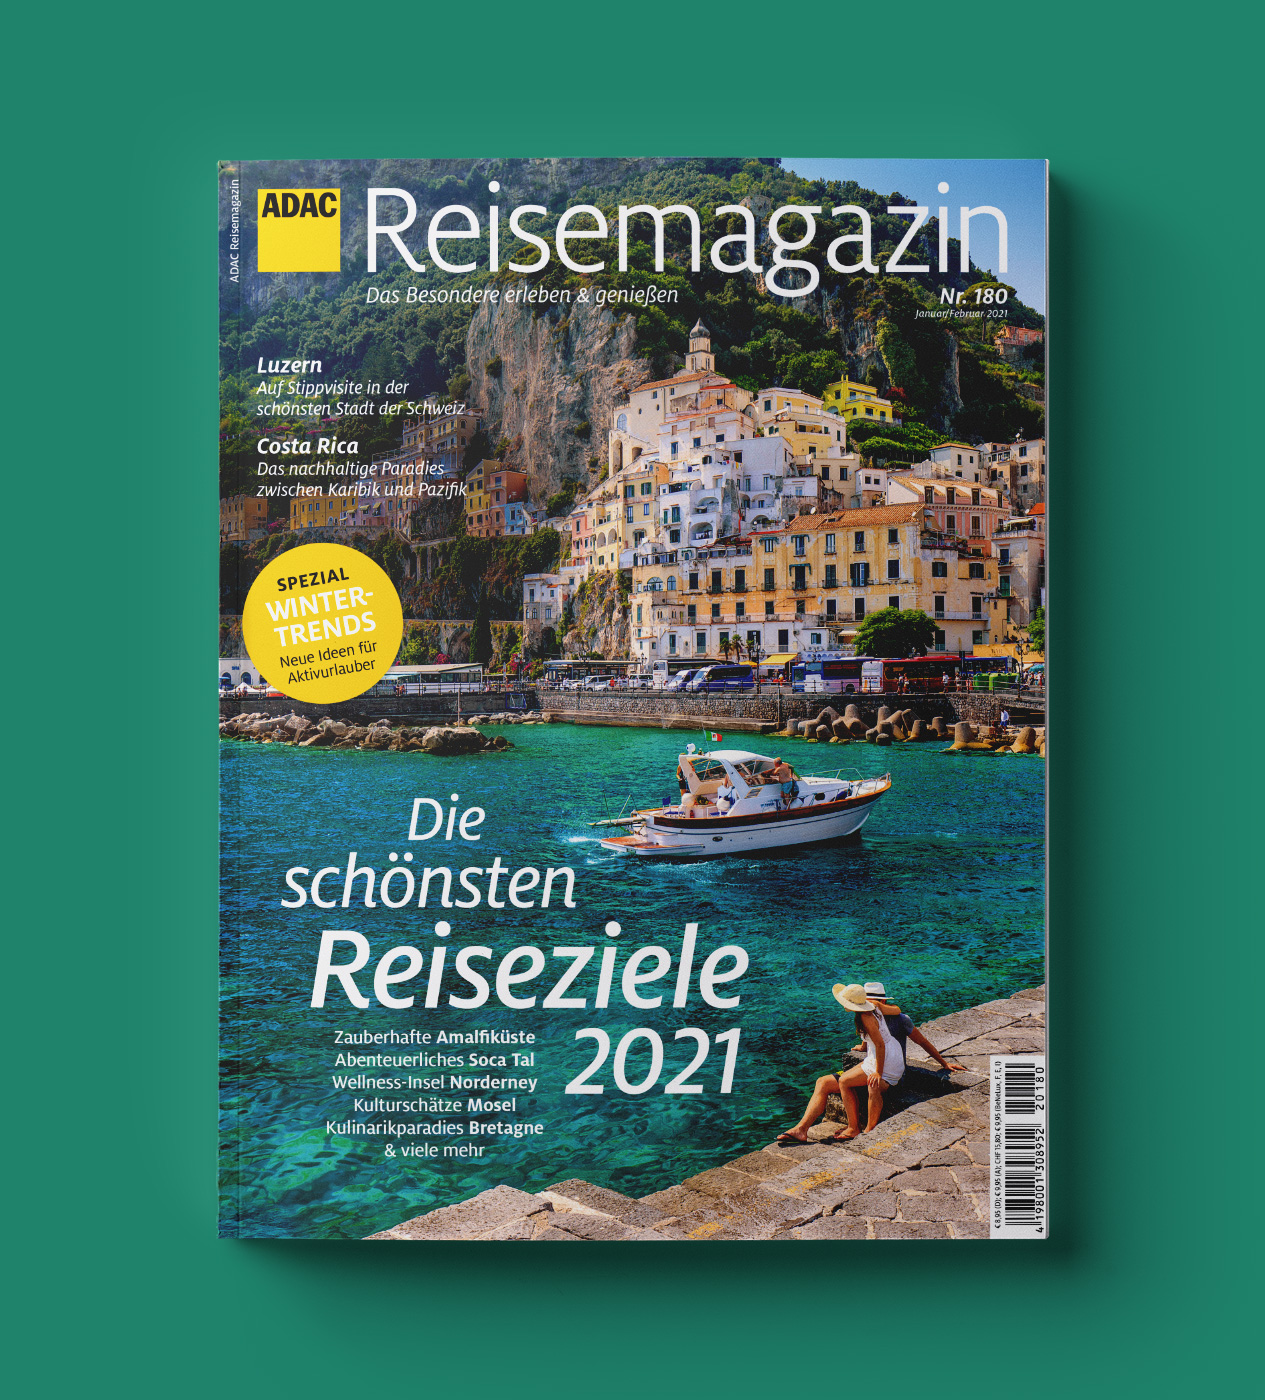 ADAC Reisemagazin Cover